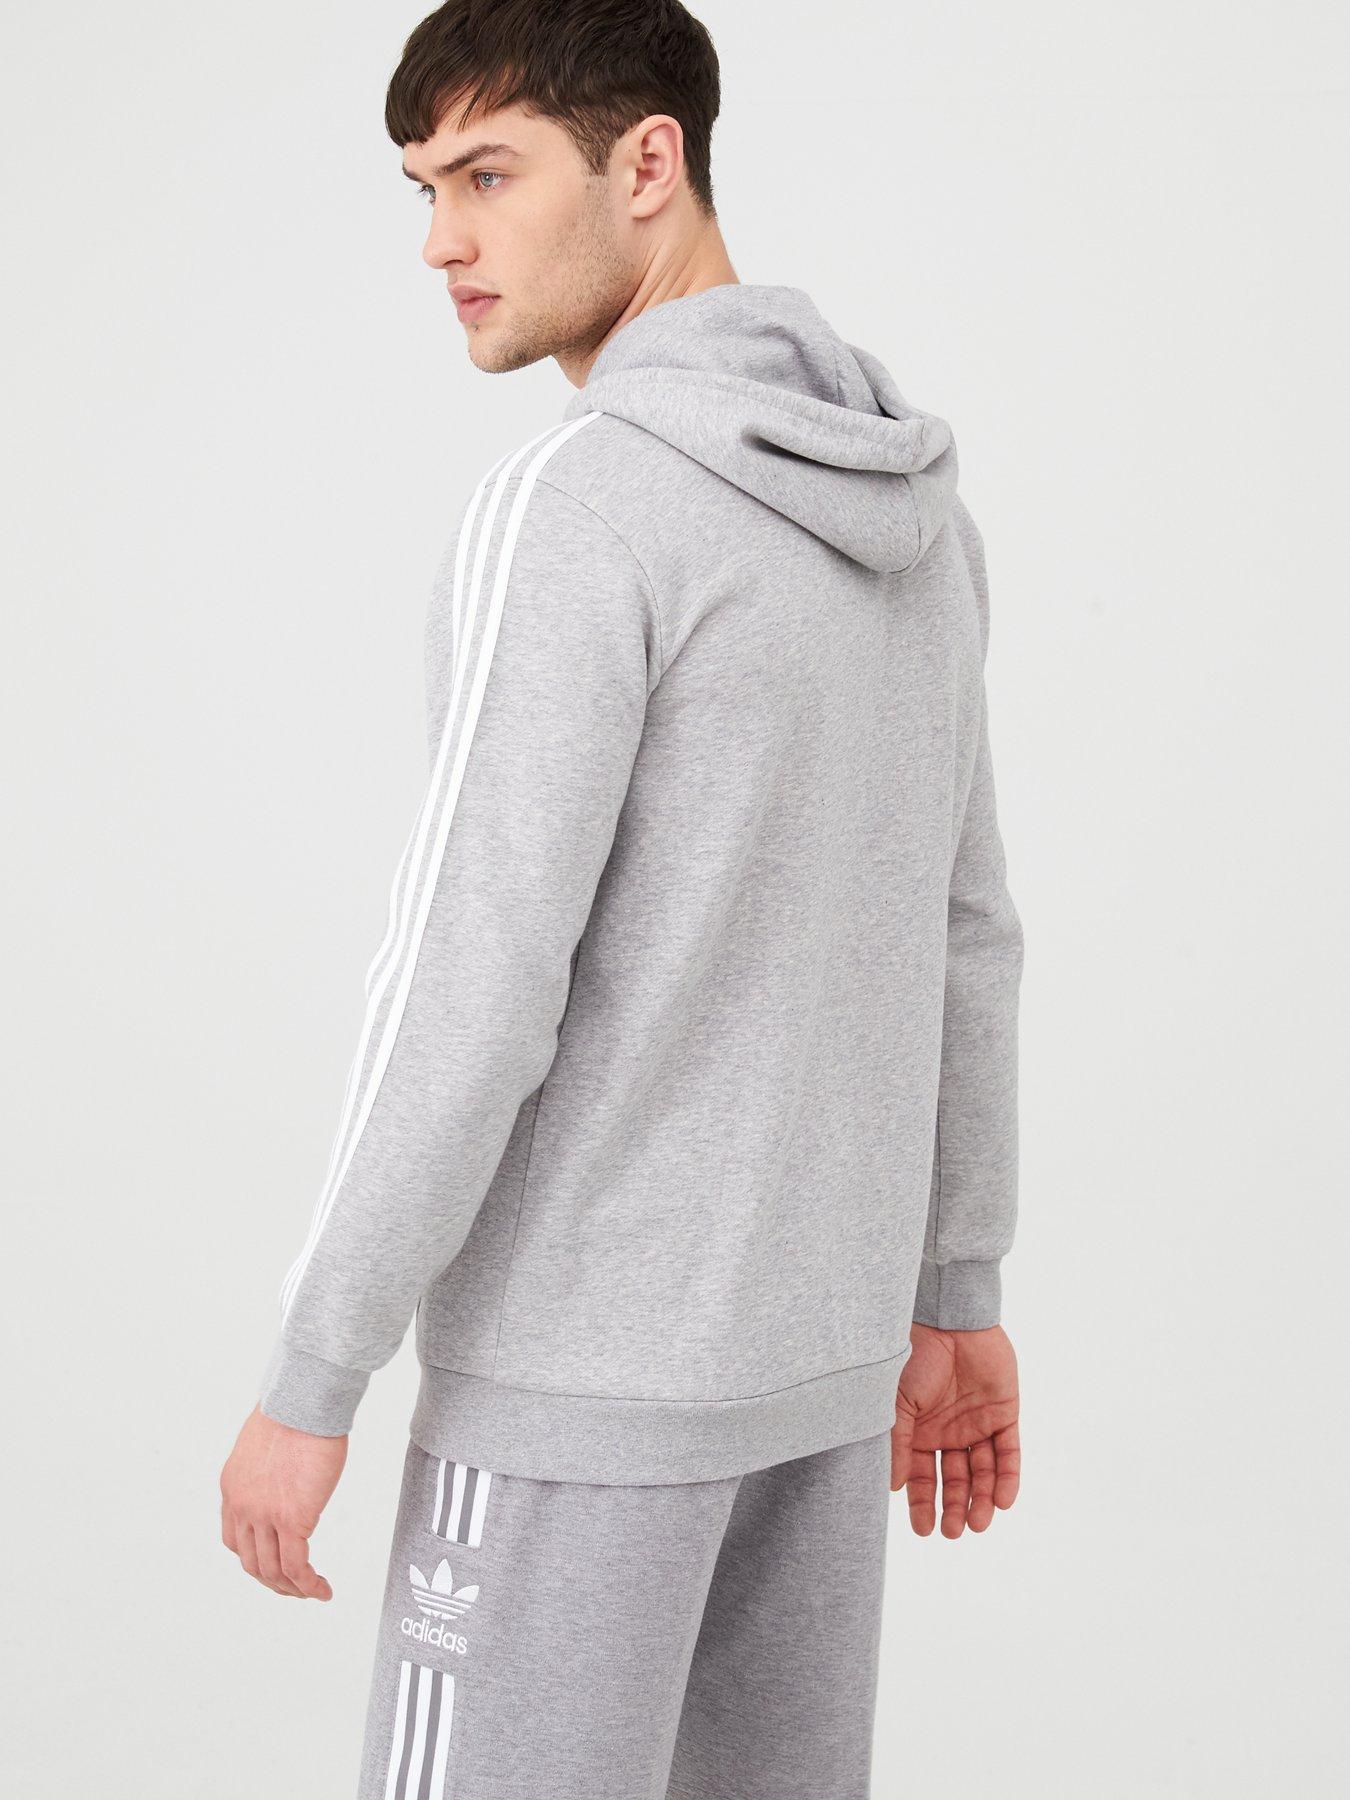 adidas mens 3 stripe knitted hooded tracksuit medium grey heather